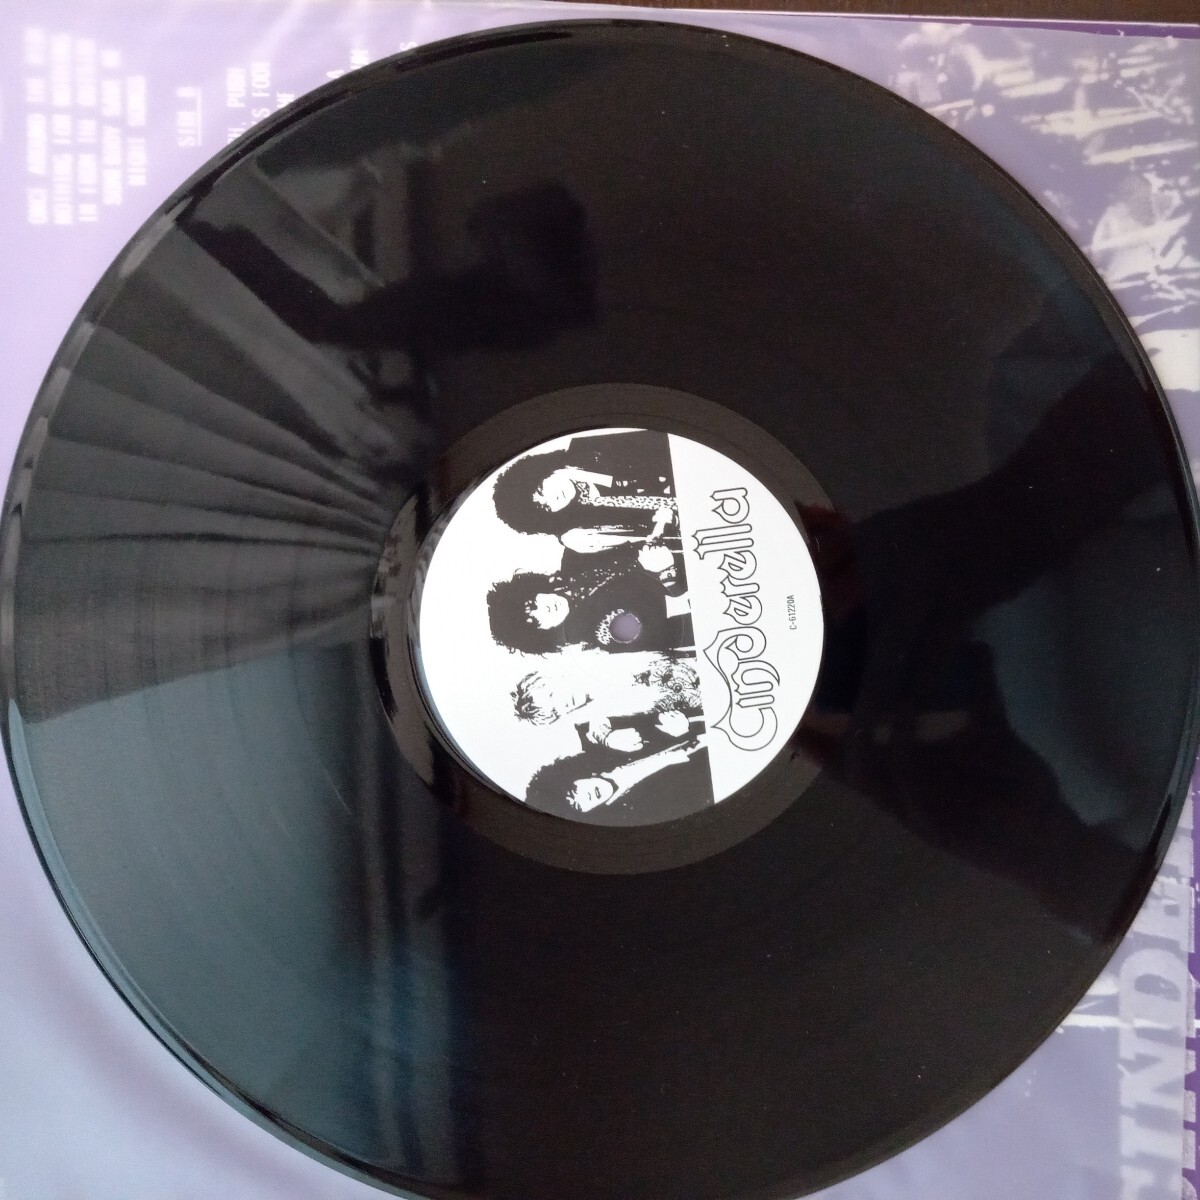 cinderella december 1986 live シンデレラ ライブanalog record vinyl レコード アナログ lp _画像6